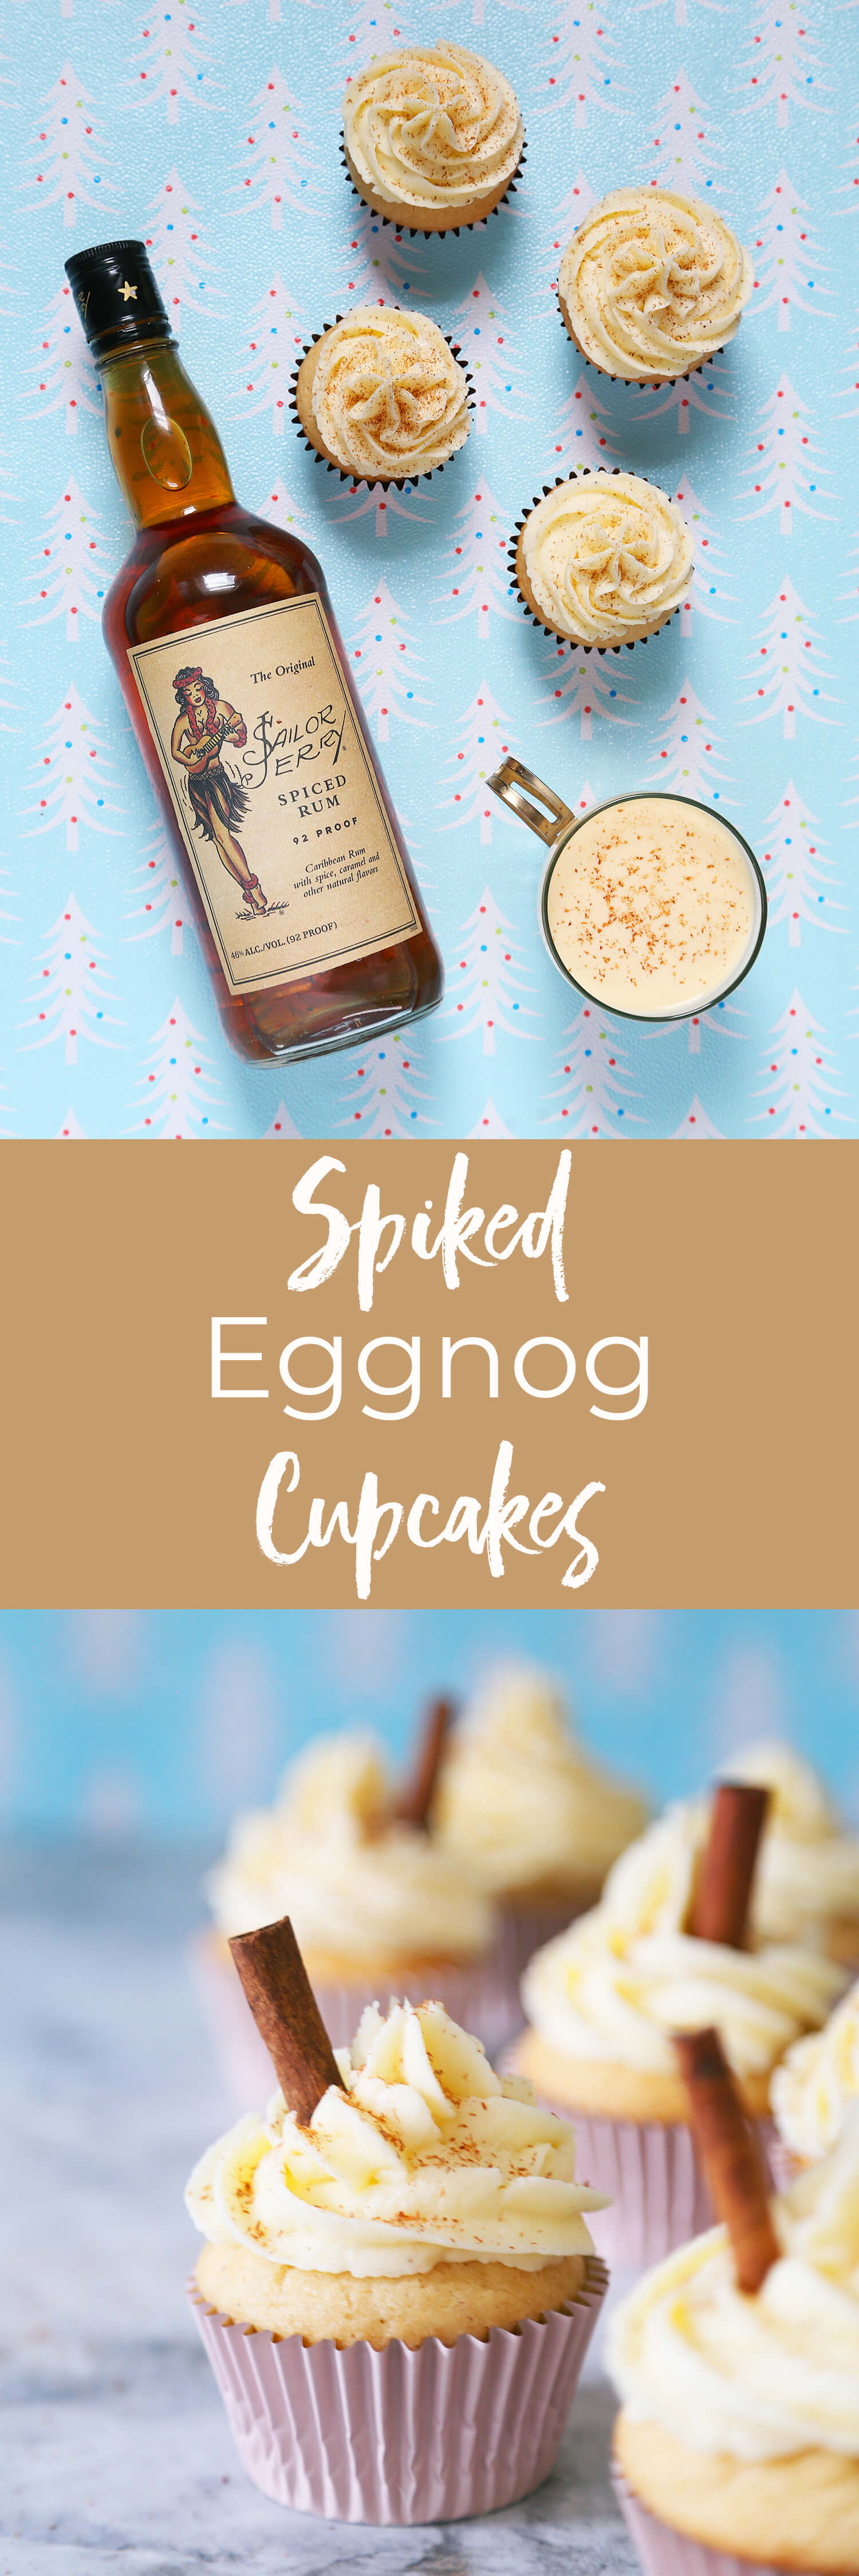 Spiked Eggnog Cupcakes